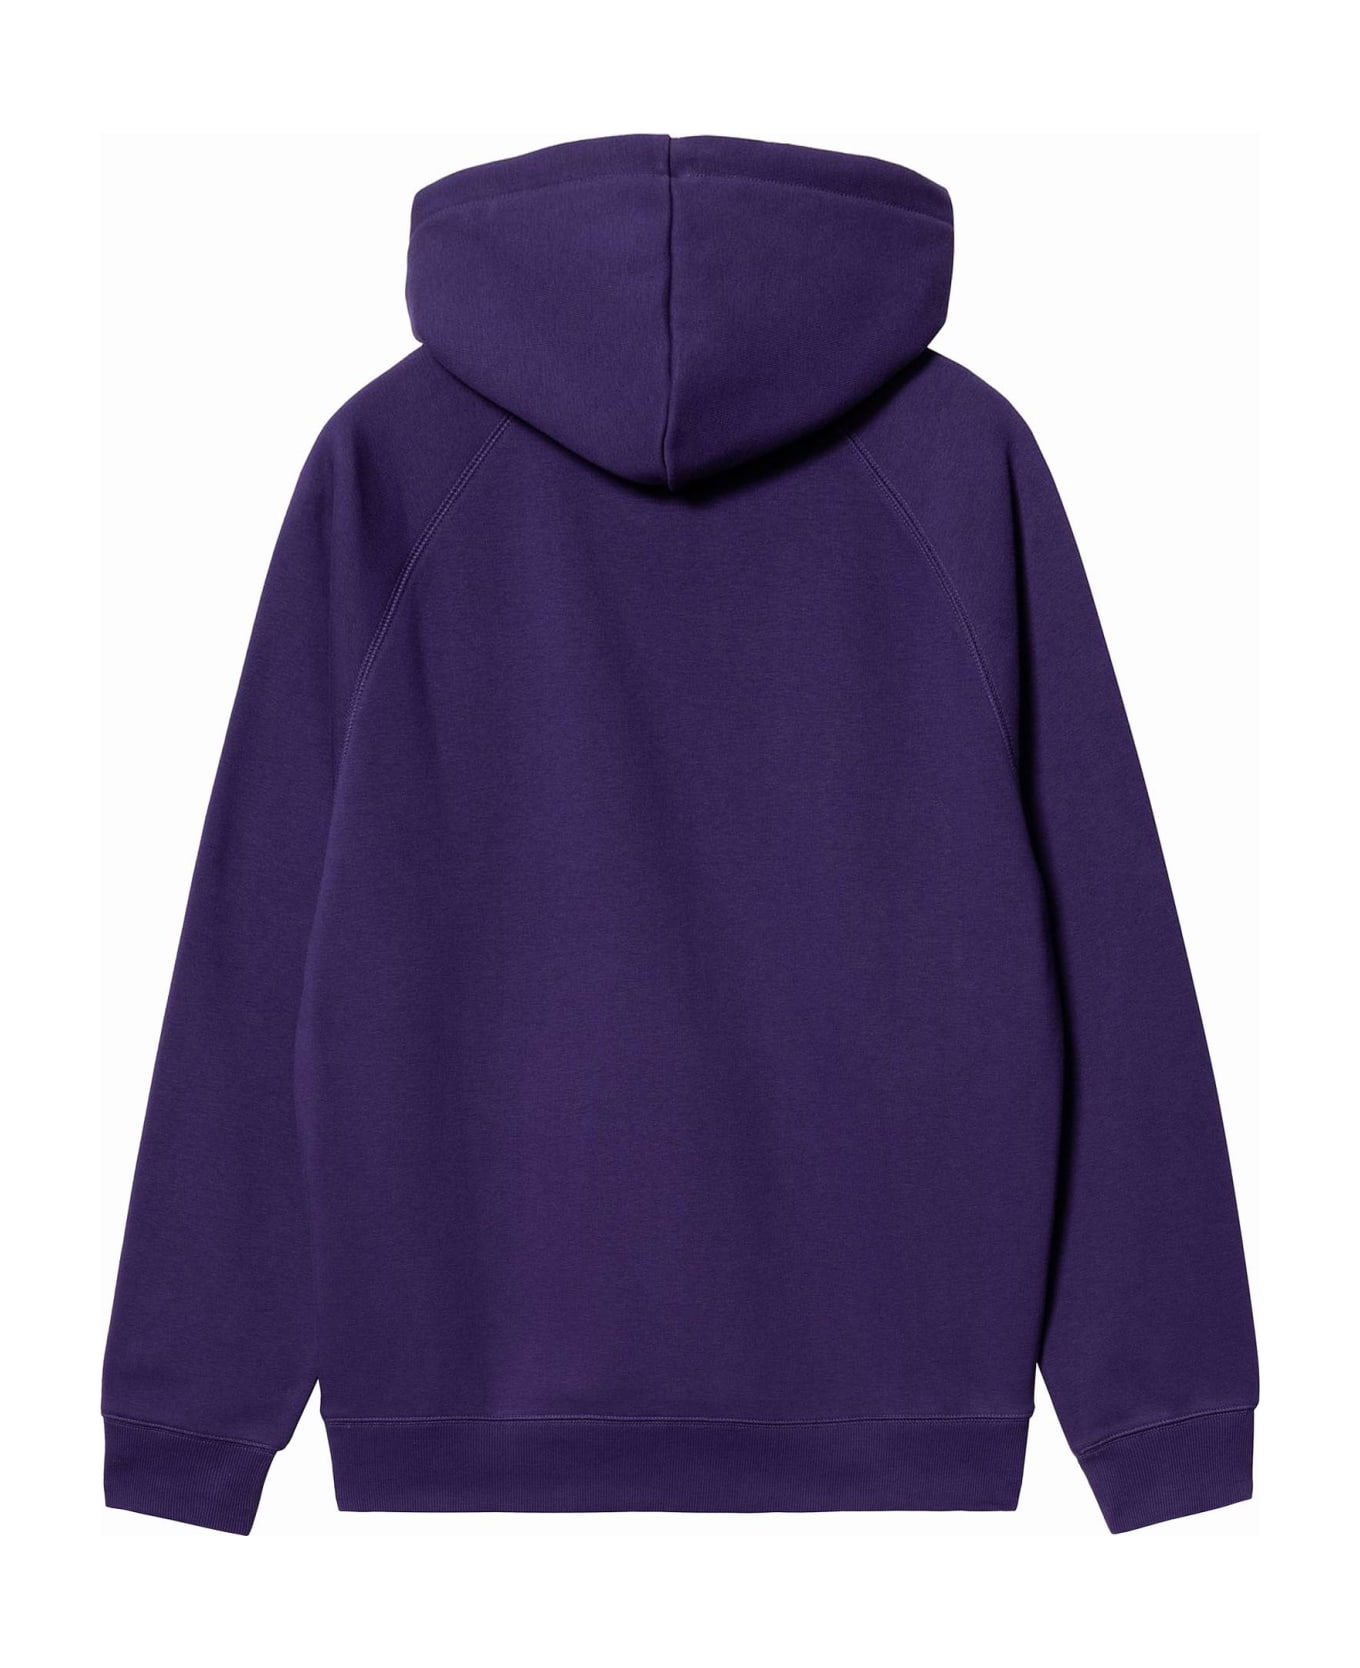 Carhartt Purple Cotton Hoodie - Viola